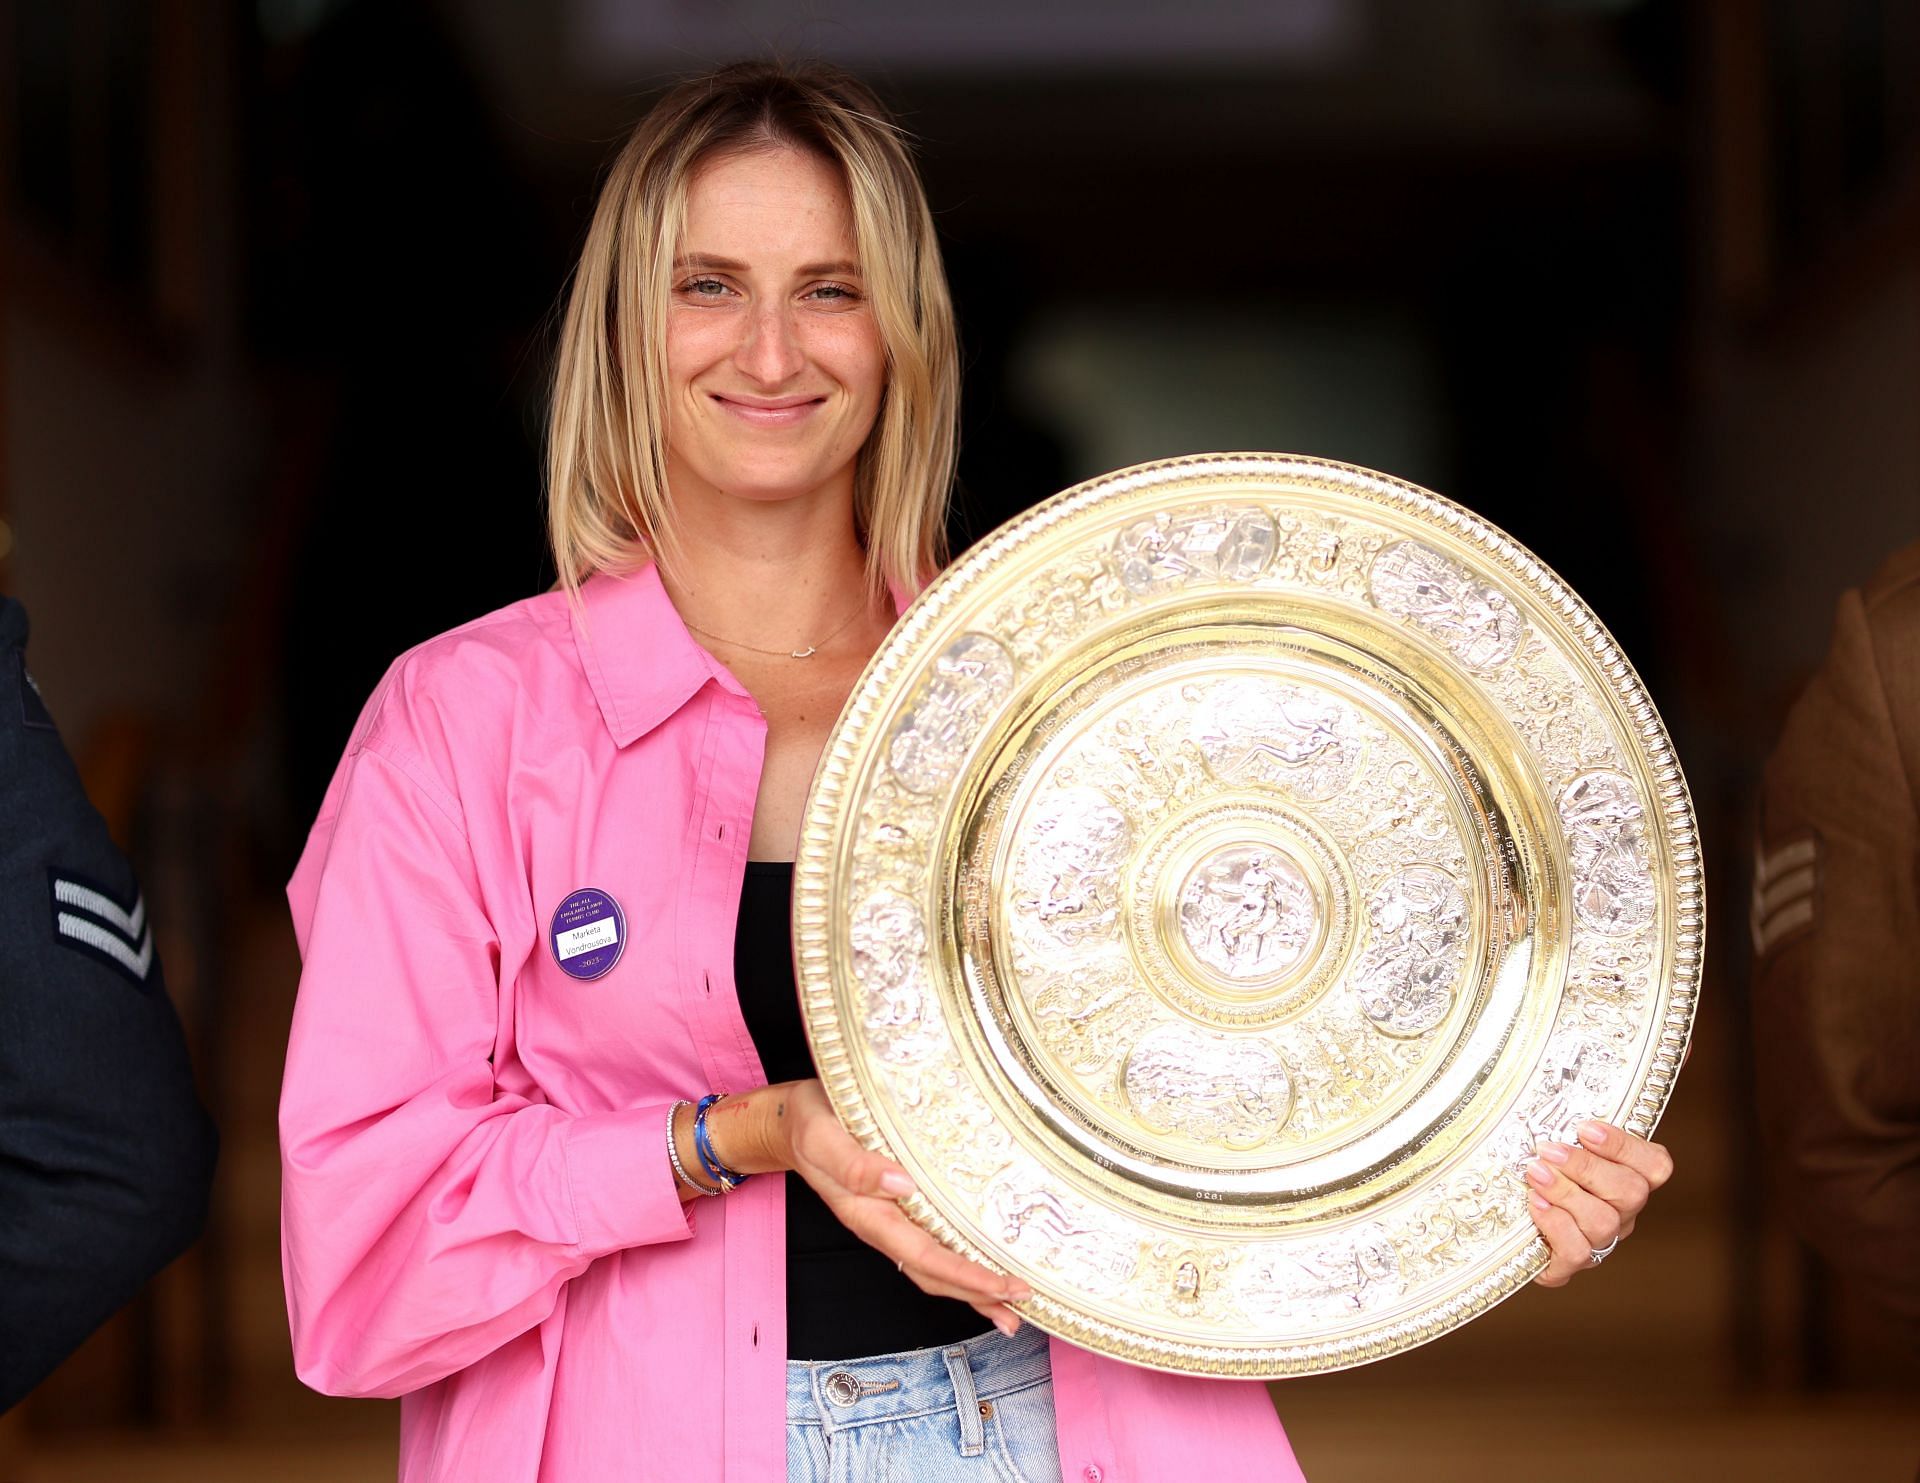 Marketa Vondrousova of the Czech Republic with the Wimbledon trophy